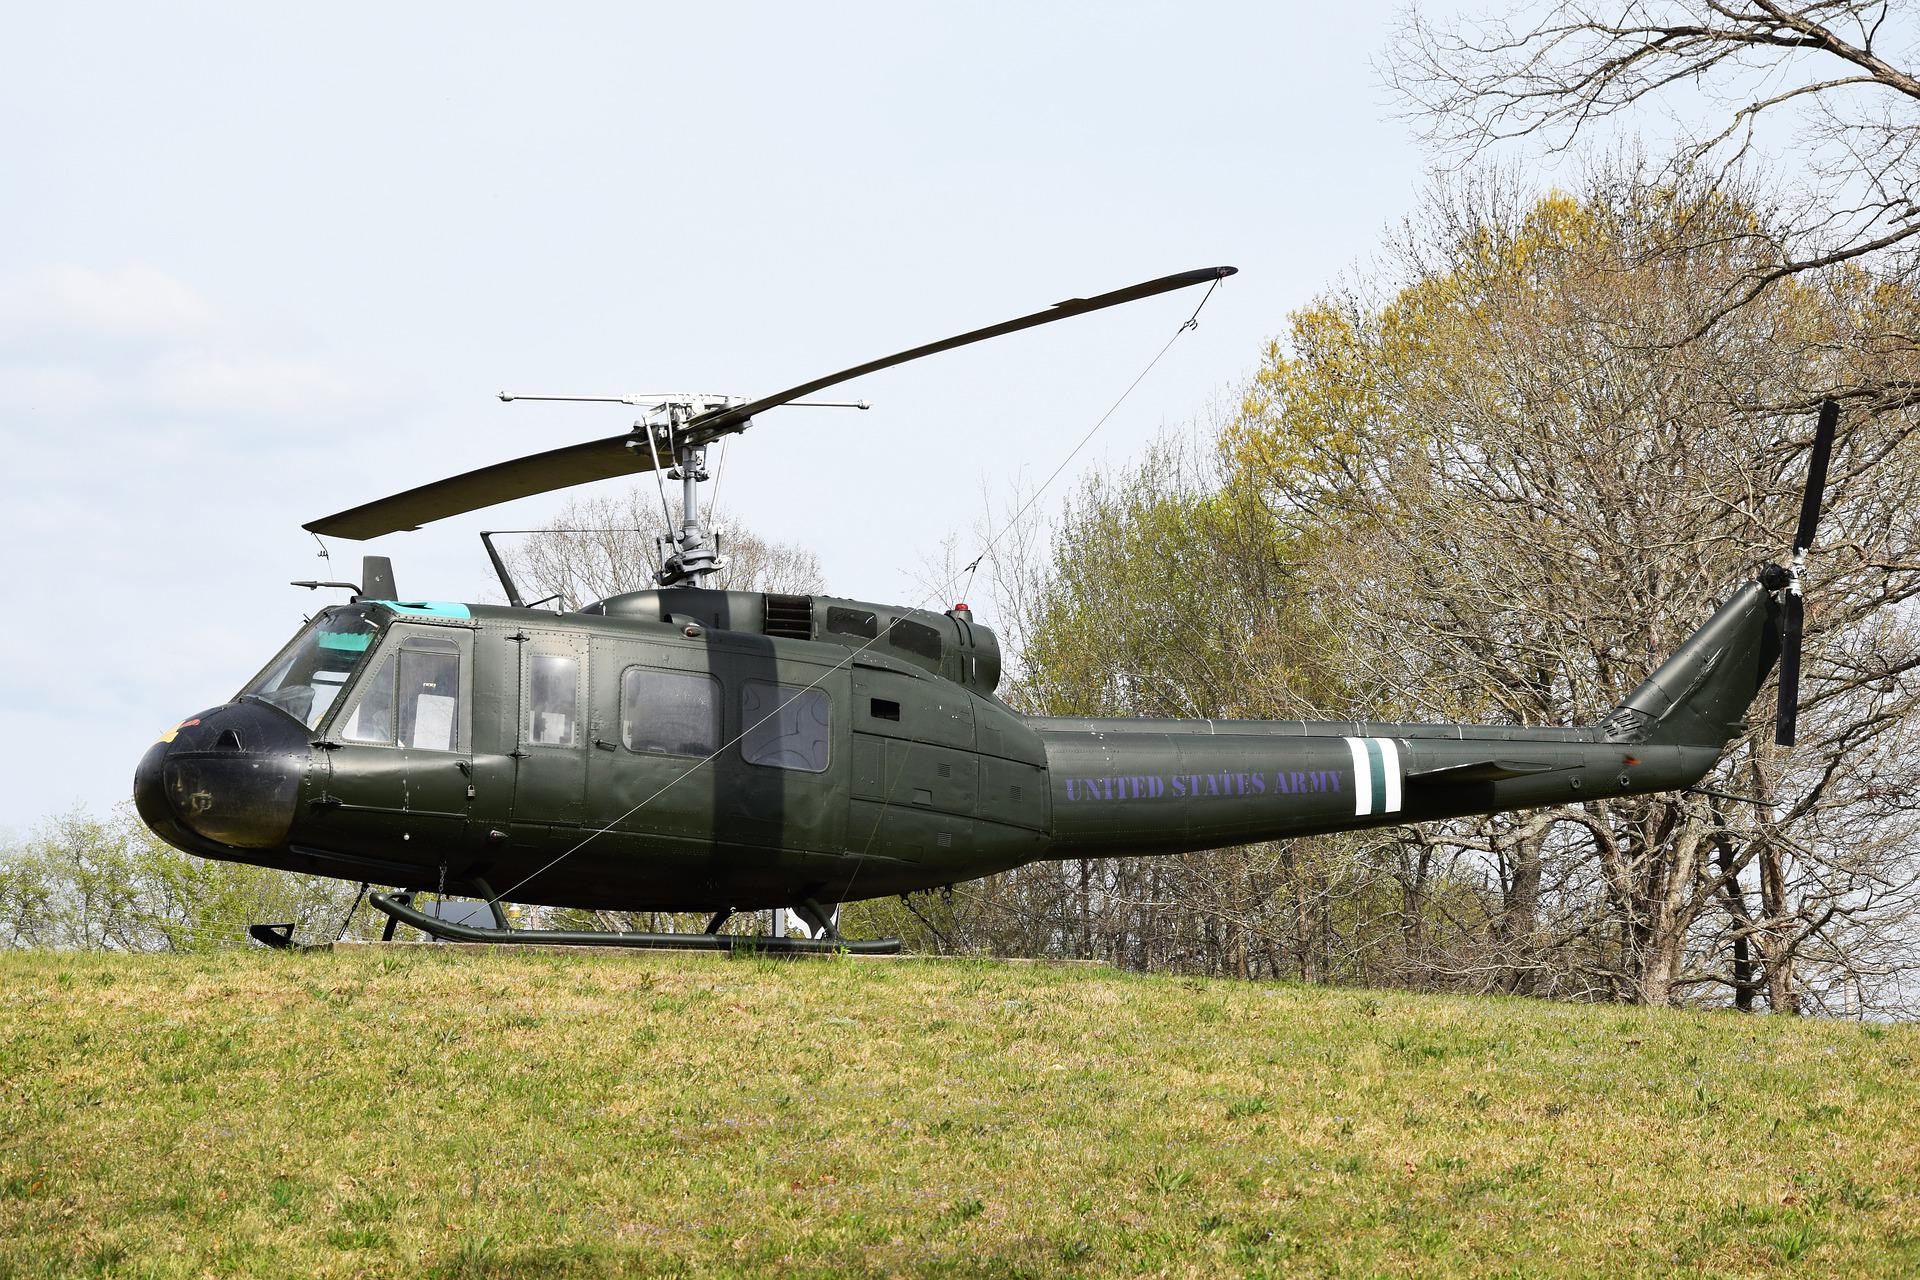 Six people die in Vietnam-era helicopter crash in US - News Leaflets